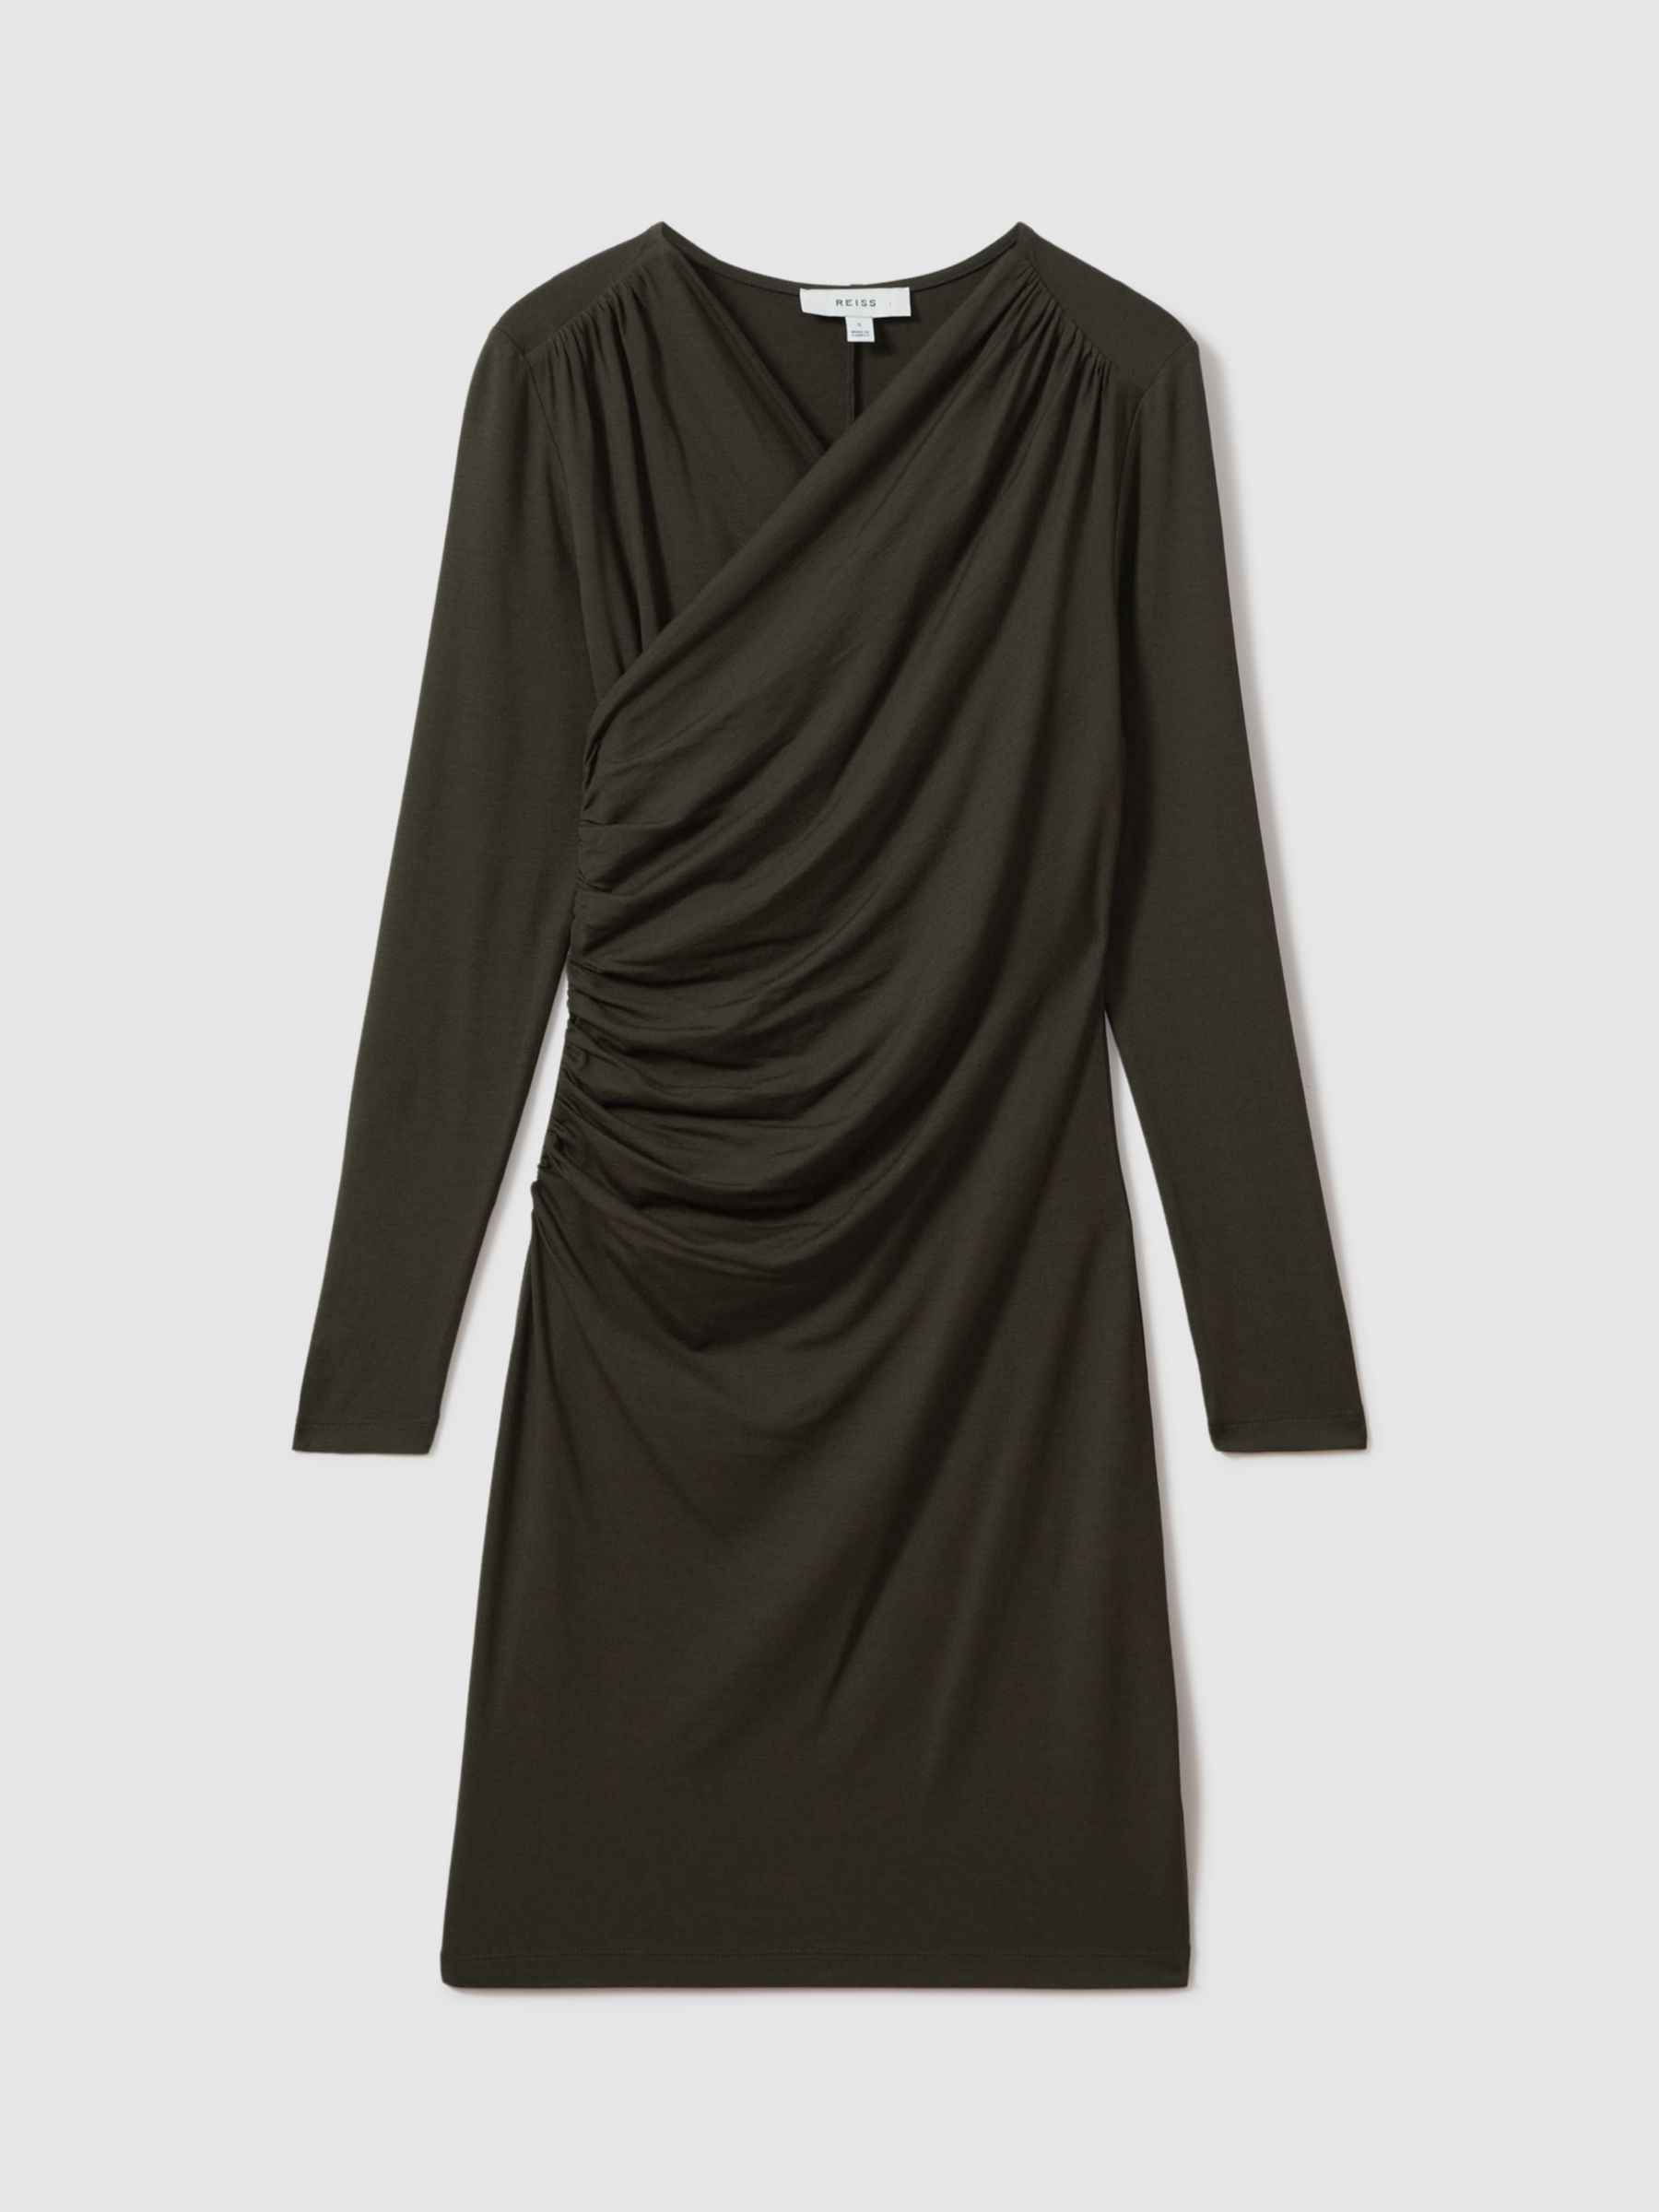 Reiss Lisa Ruched Jersey Mini Dress, Khaki, XS